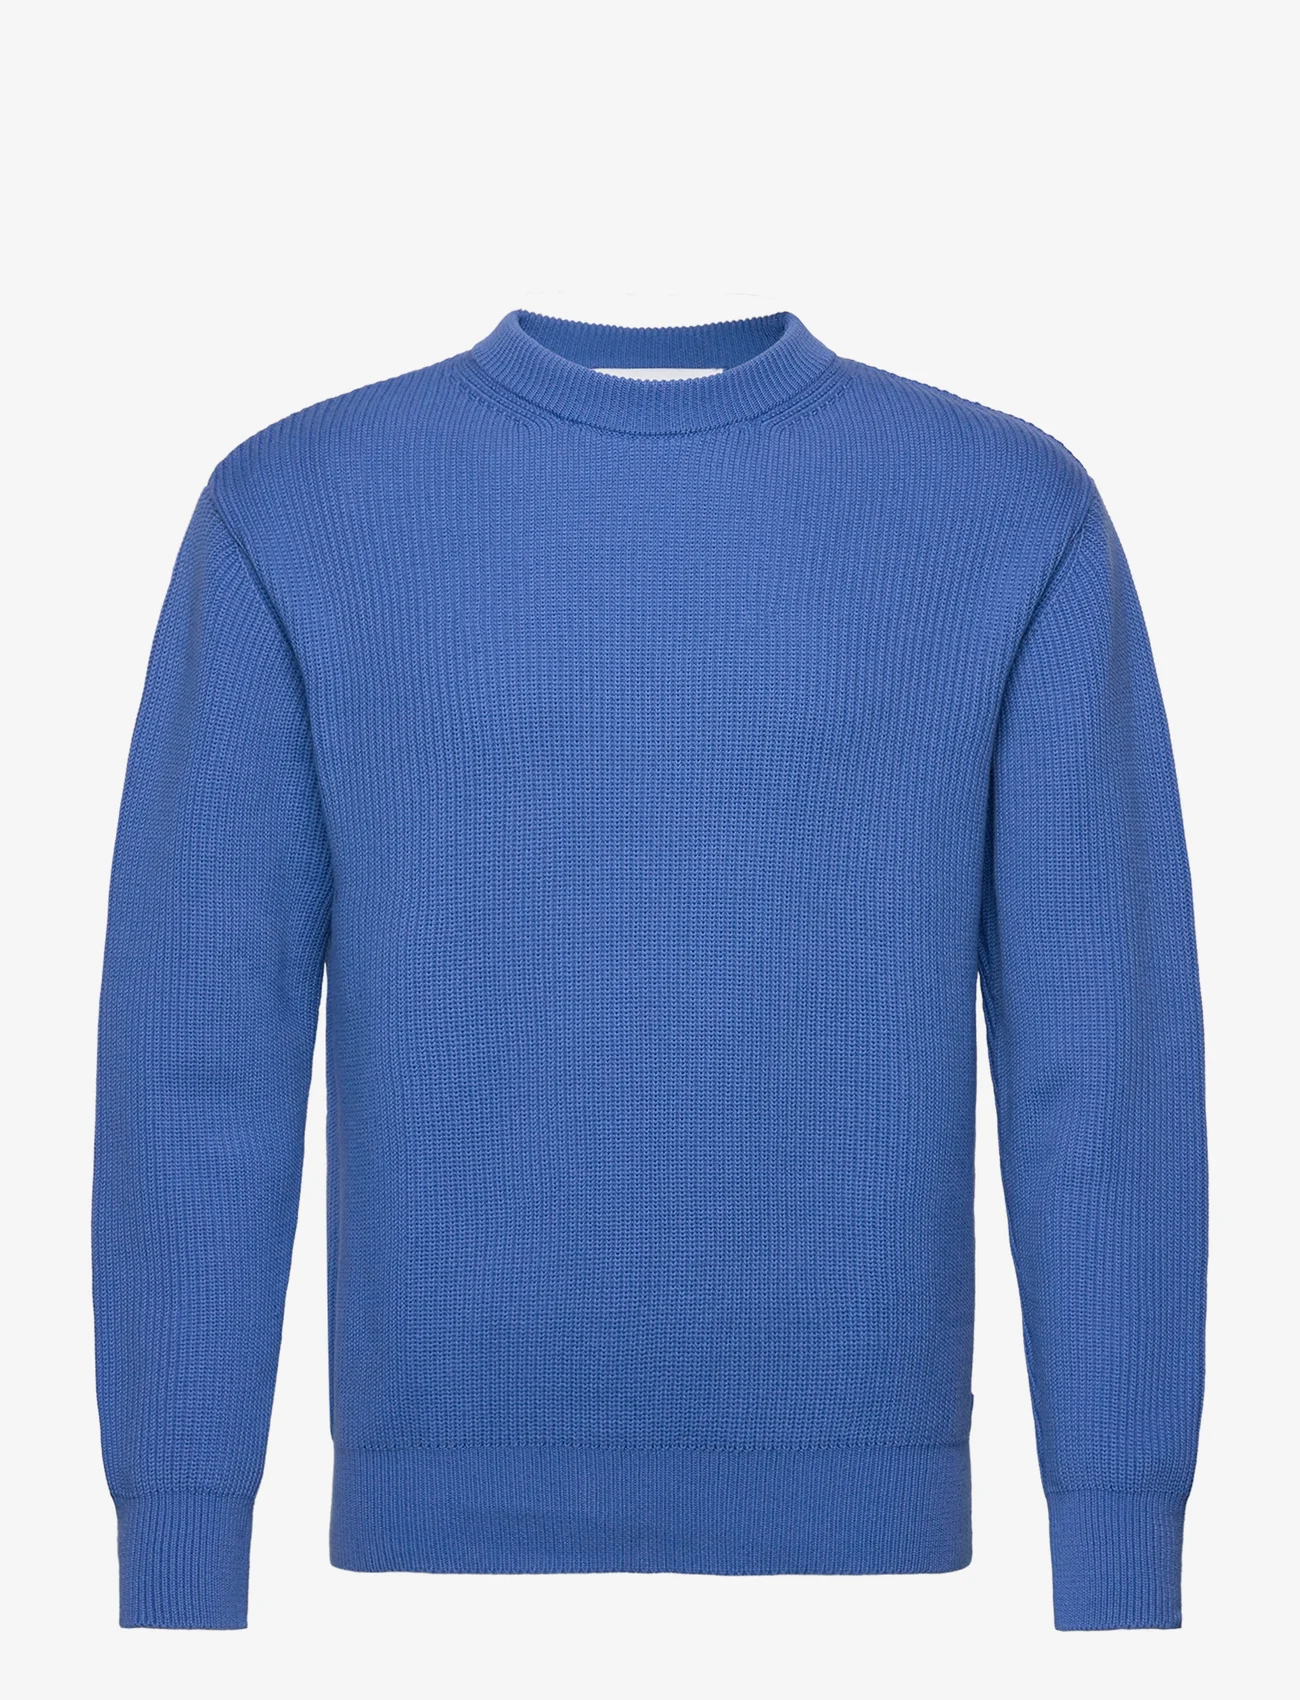 Garment Project - Round Neck Knit - Blue - knitted round necks - blue - 0